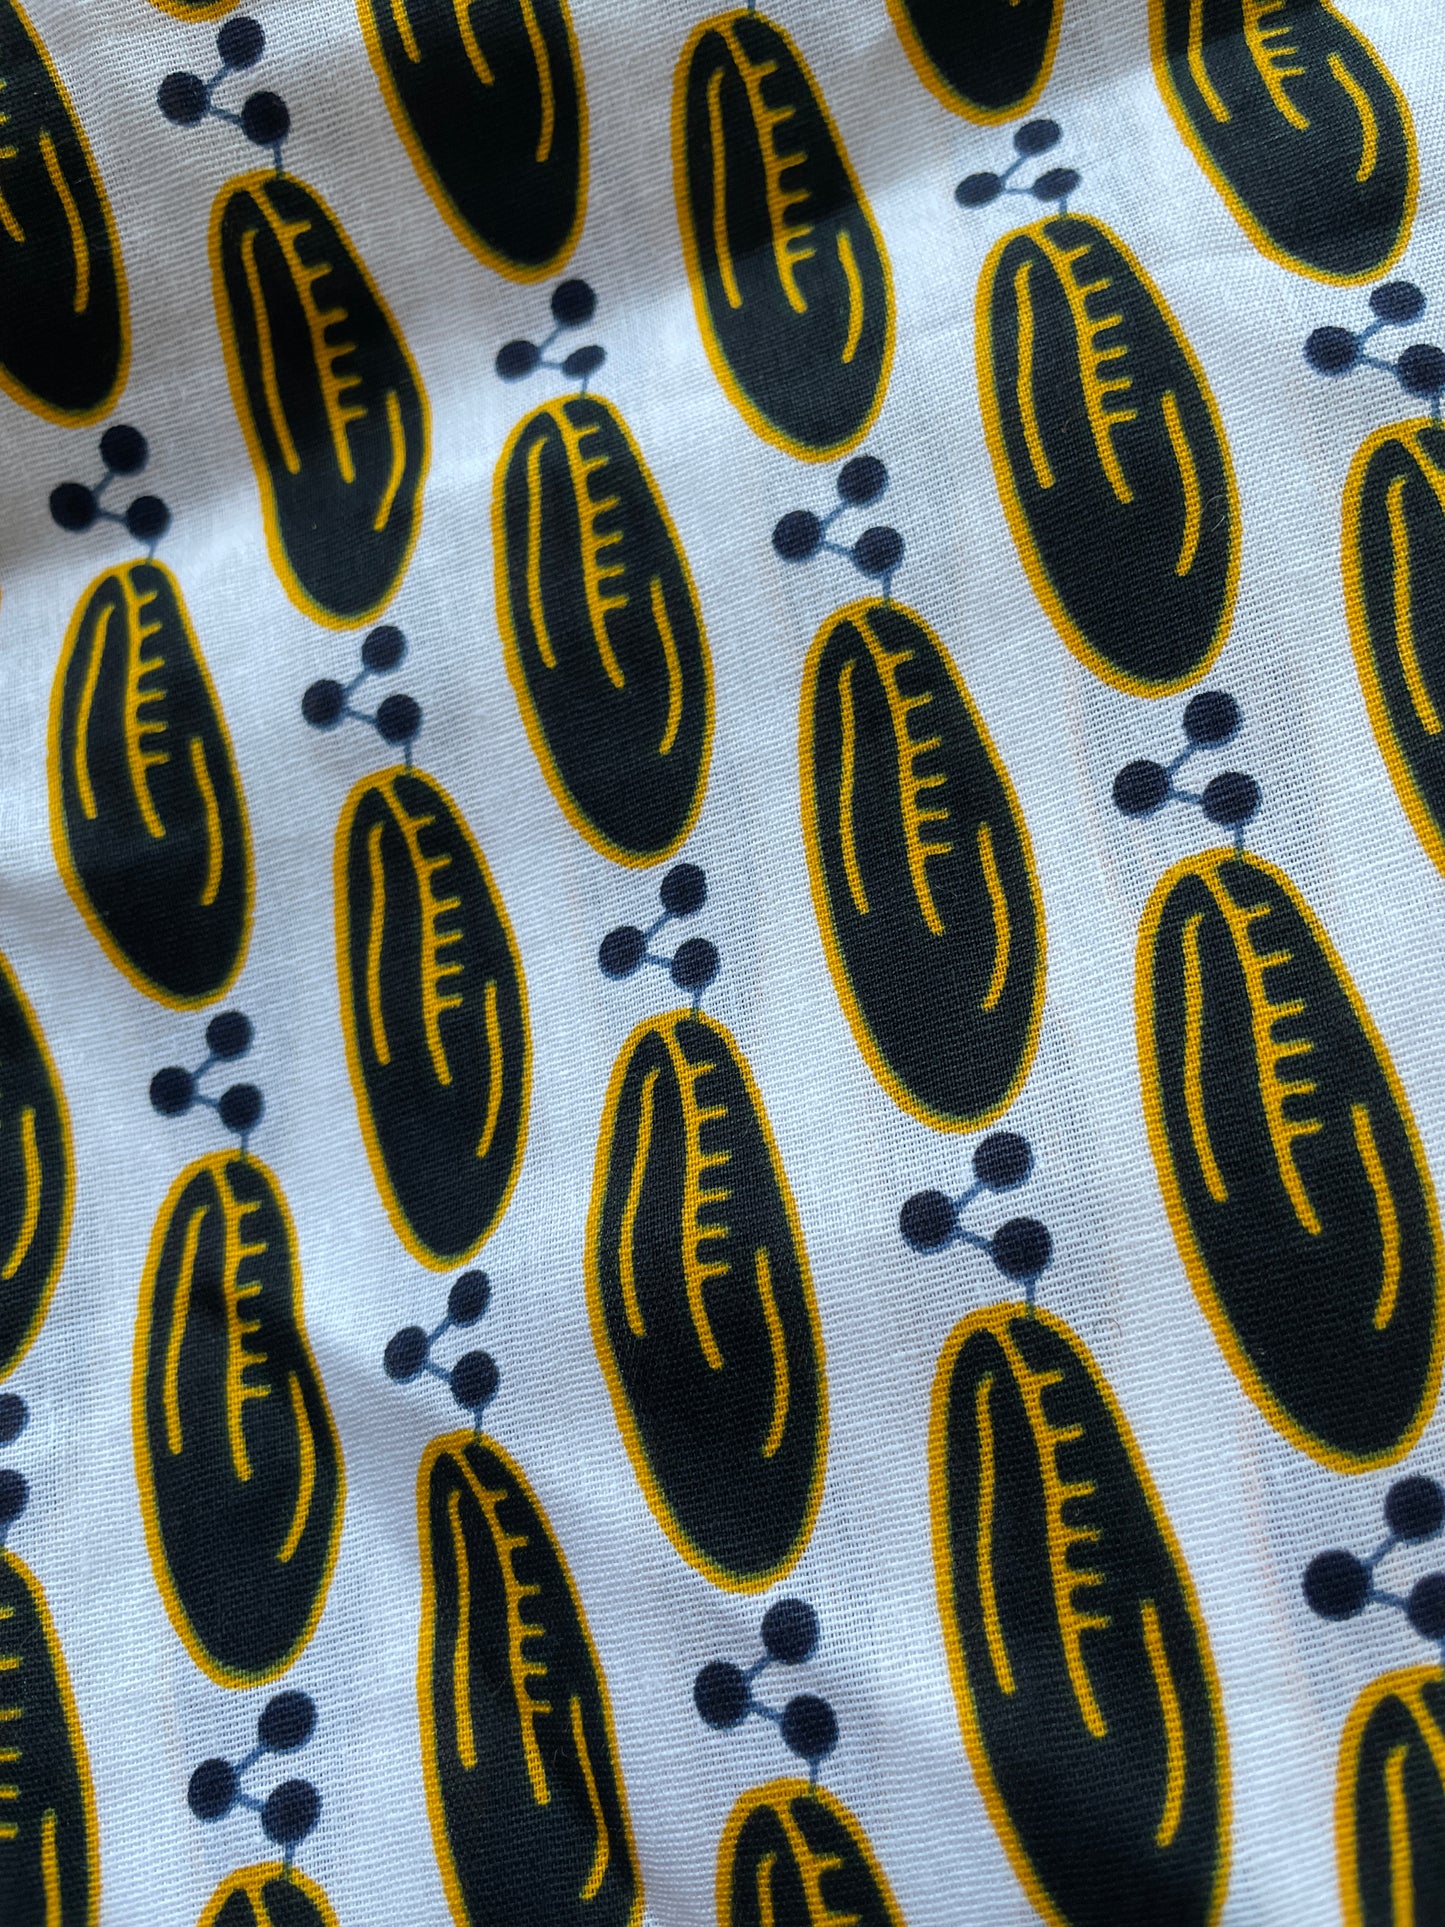 African kitenge fabric - drawstring tote (large - coffee bean print)